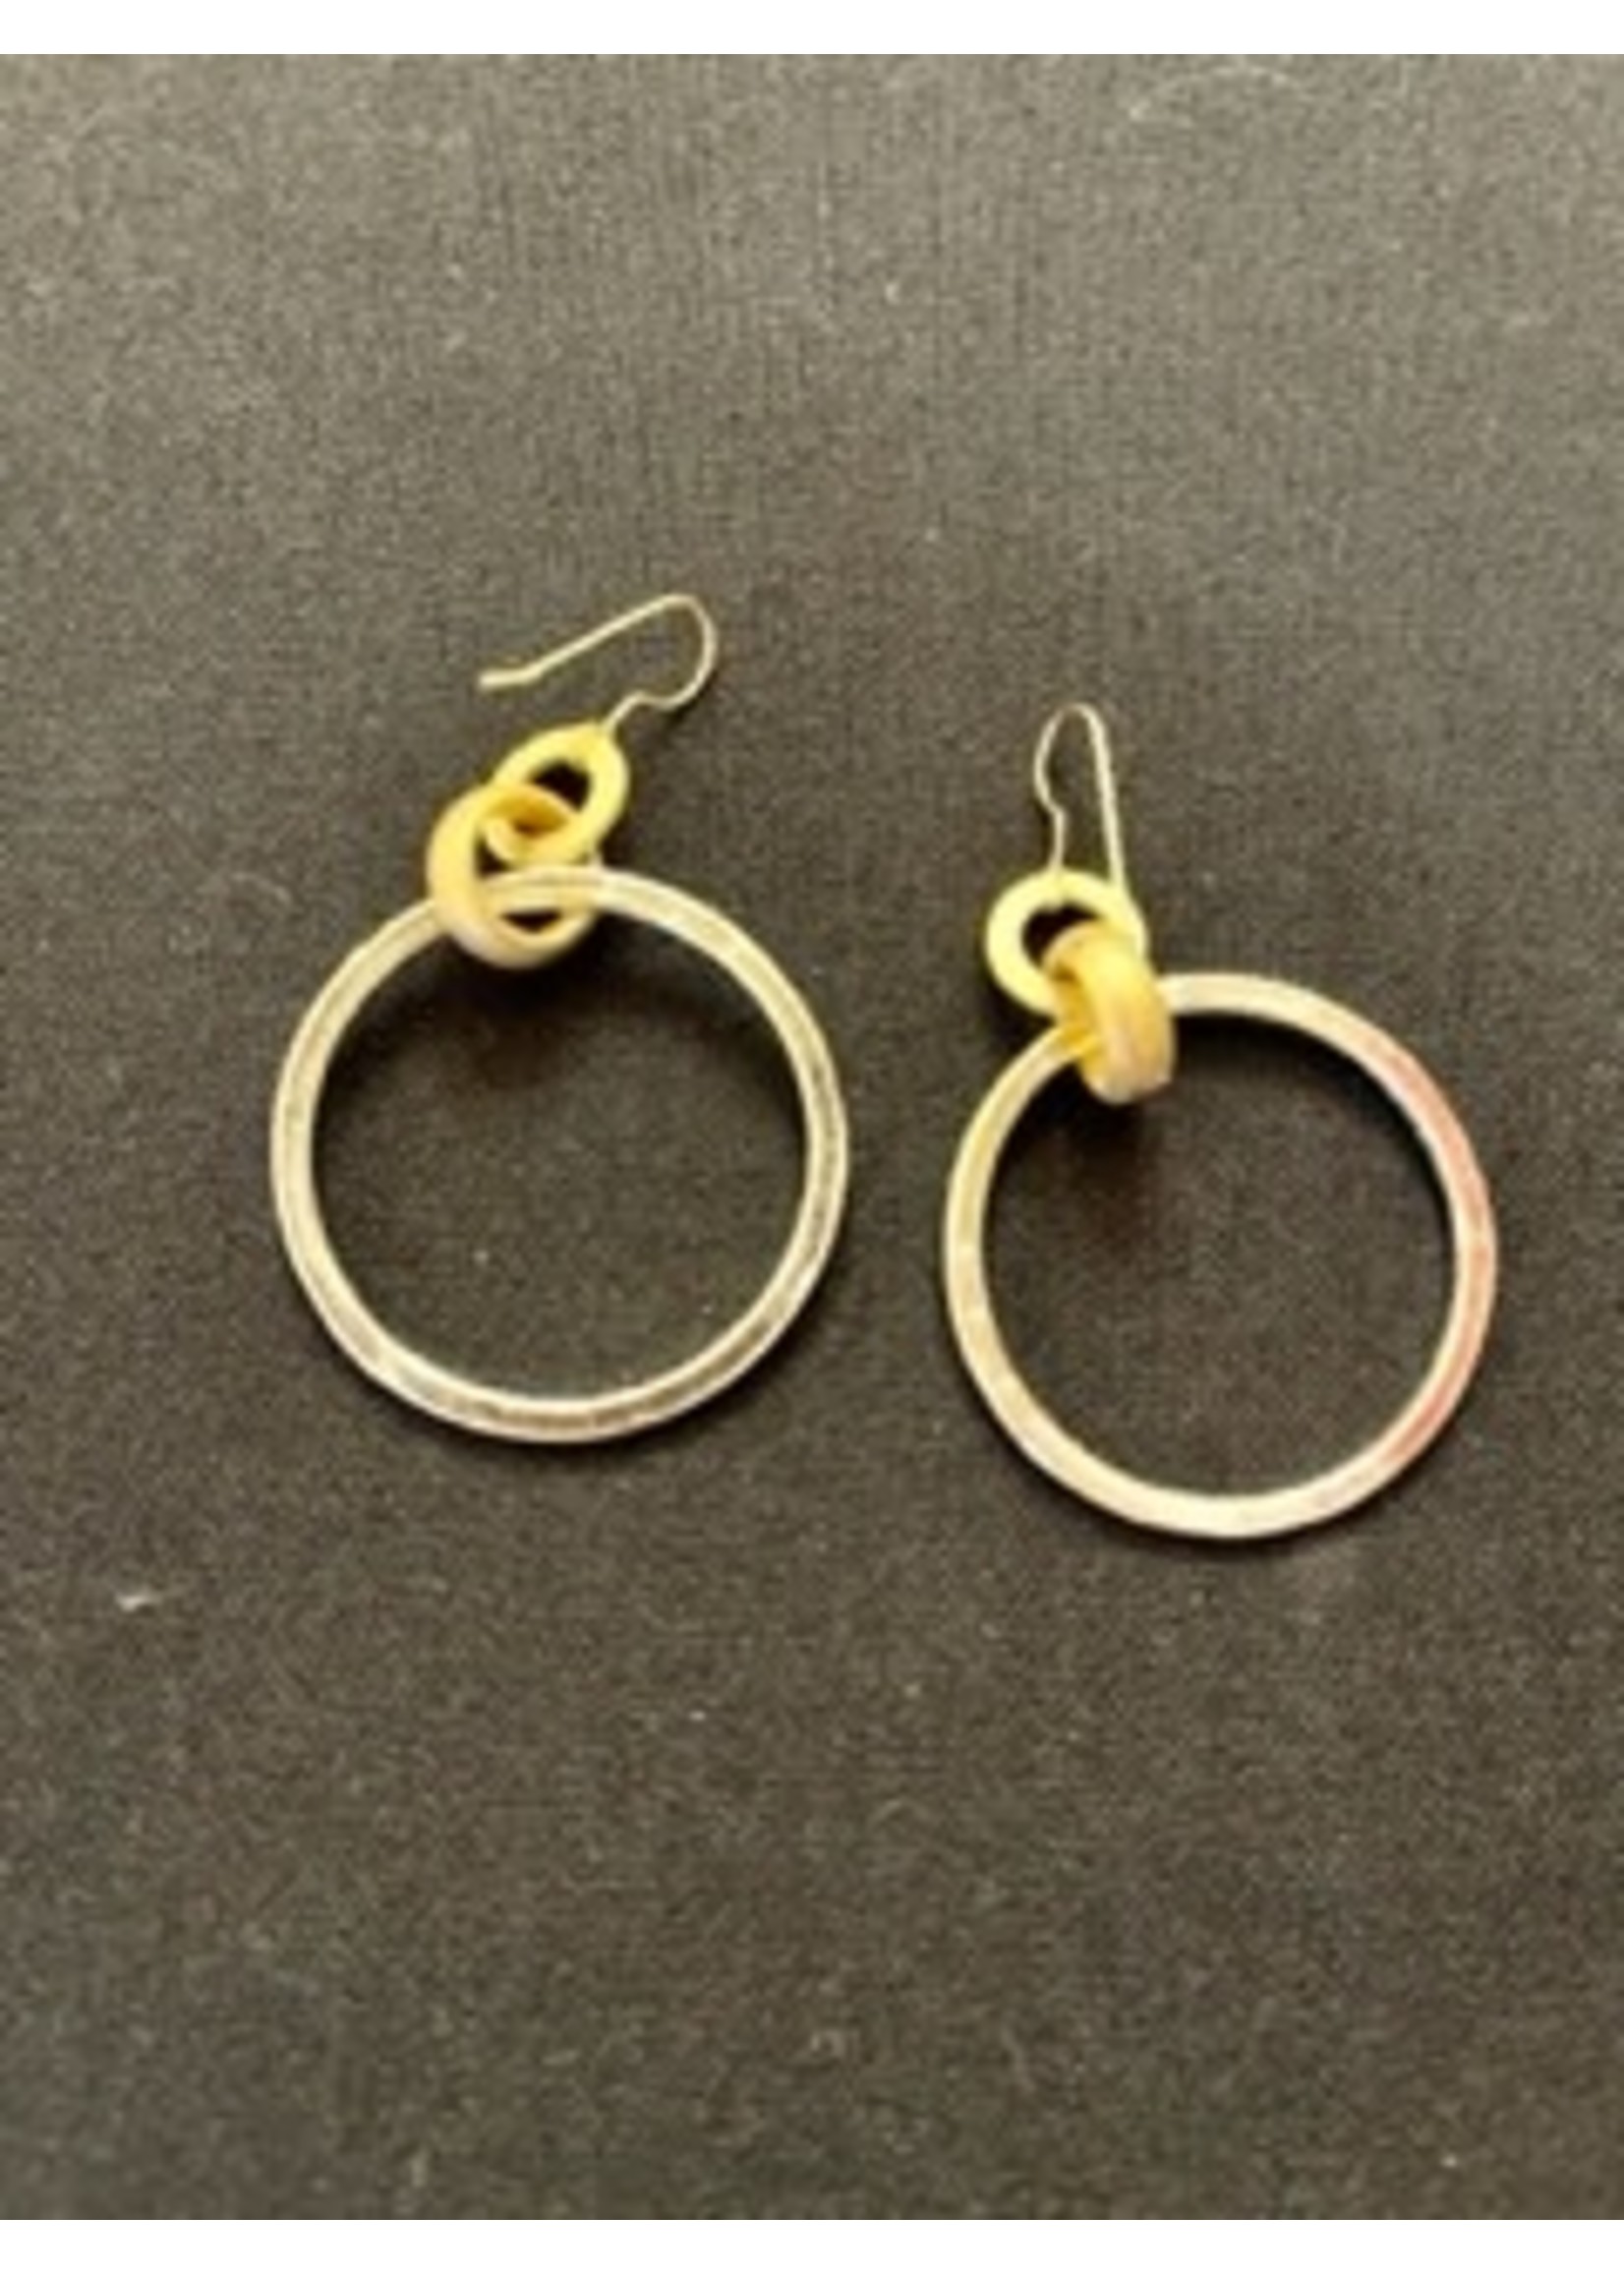 LJ Sonder Amanda Silver circle earrings with gold connectors